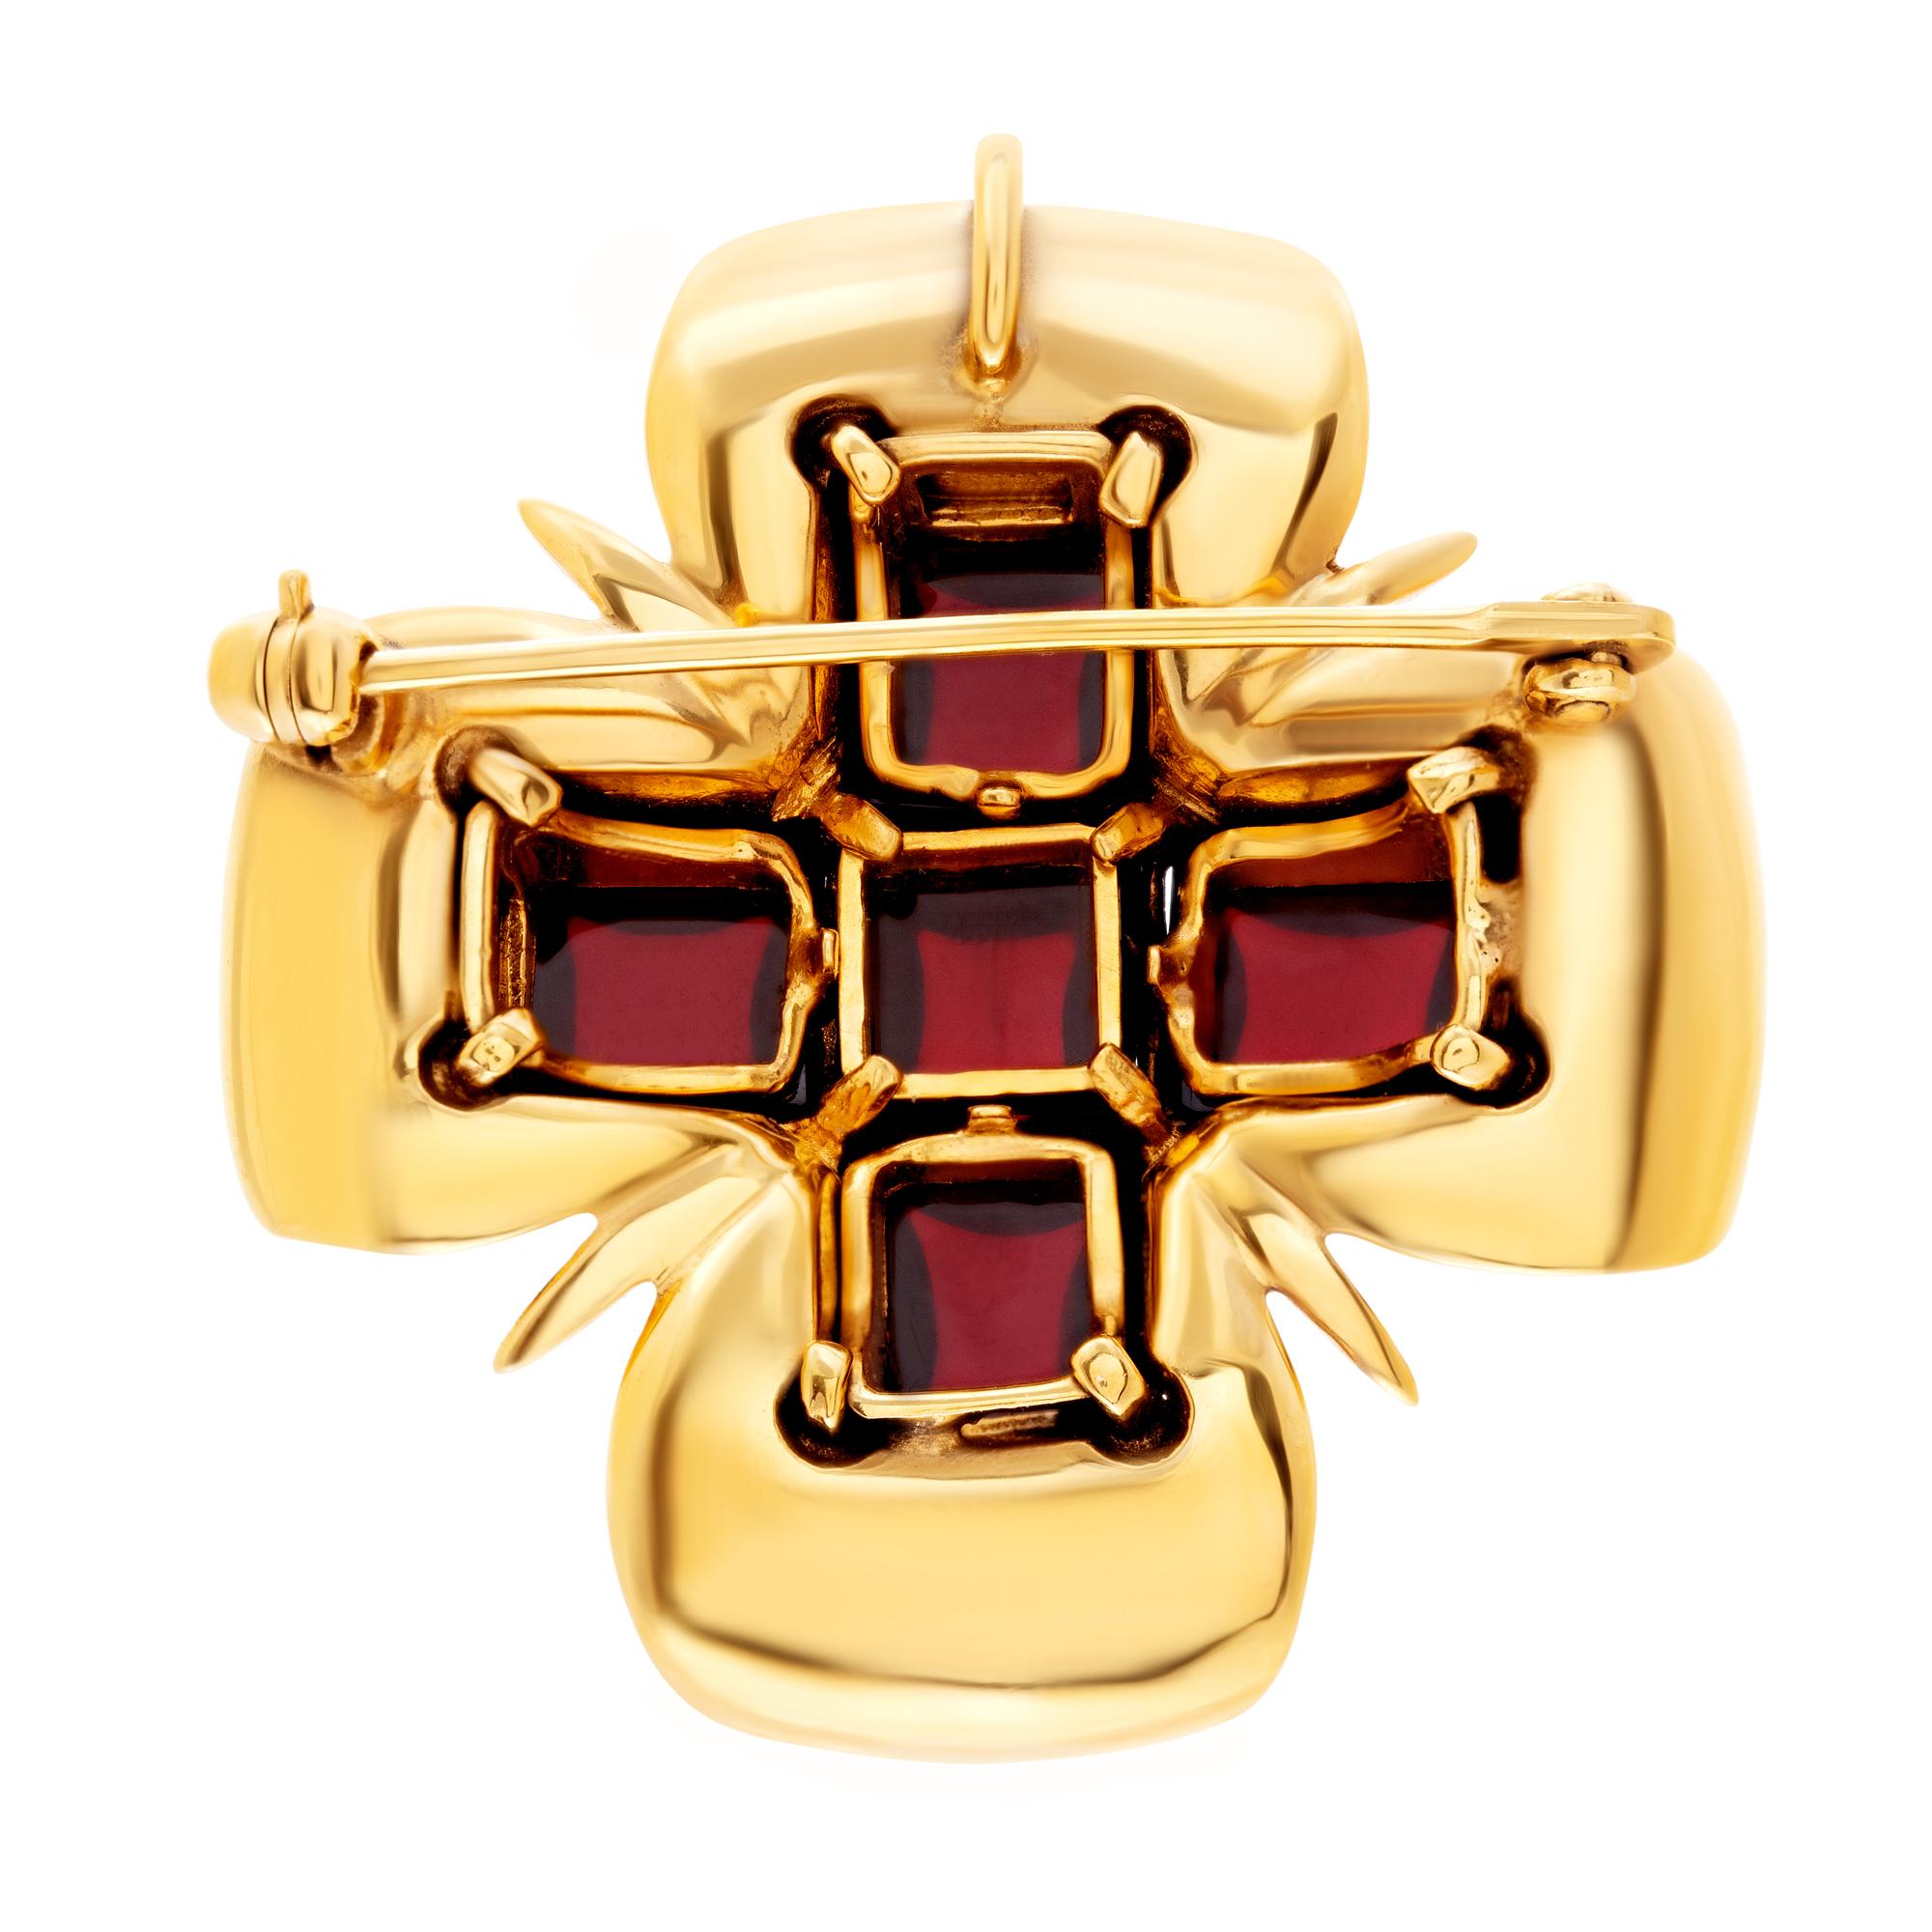 Women's Byzantine Cross Brooch/Pendant with Garnet Set in 14k Gold, from the 